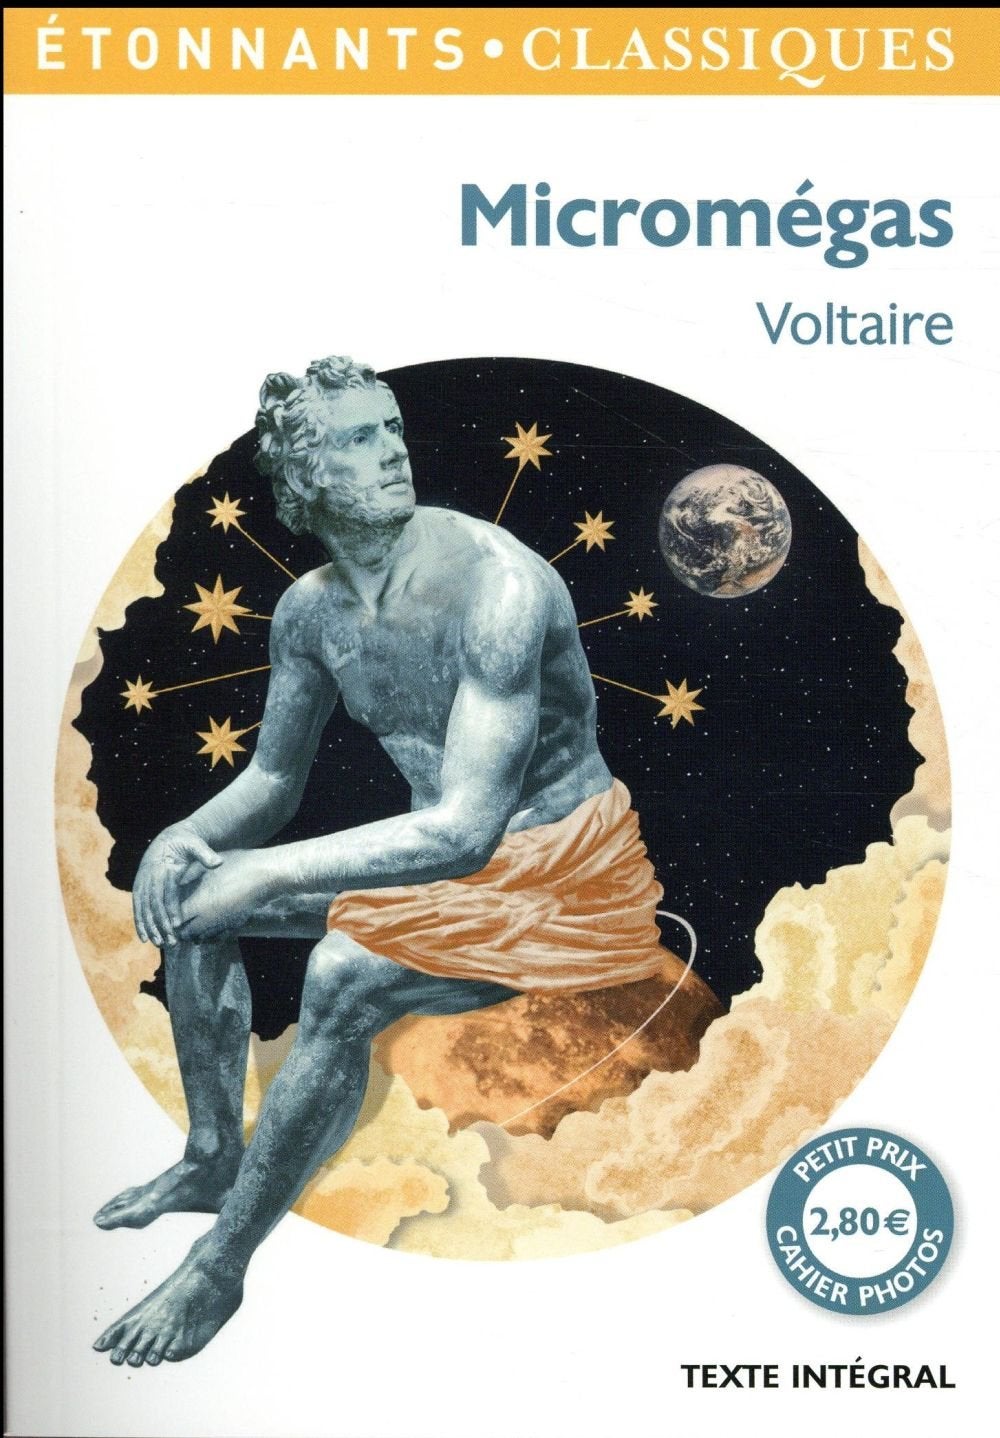 Cover of Étonnants Classiques edition of Micromégas. (Image: Flammarion)